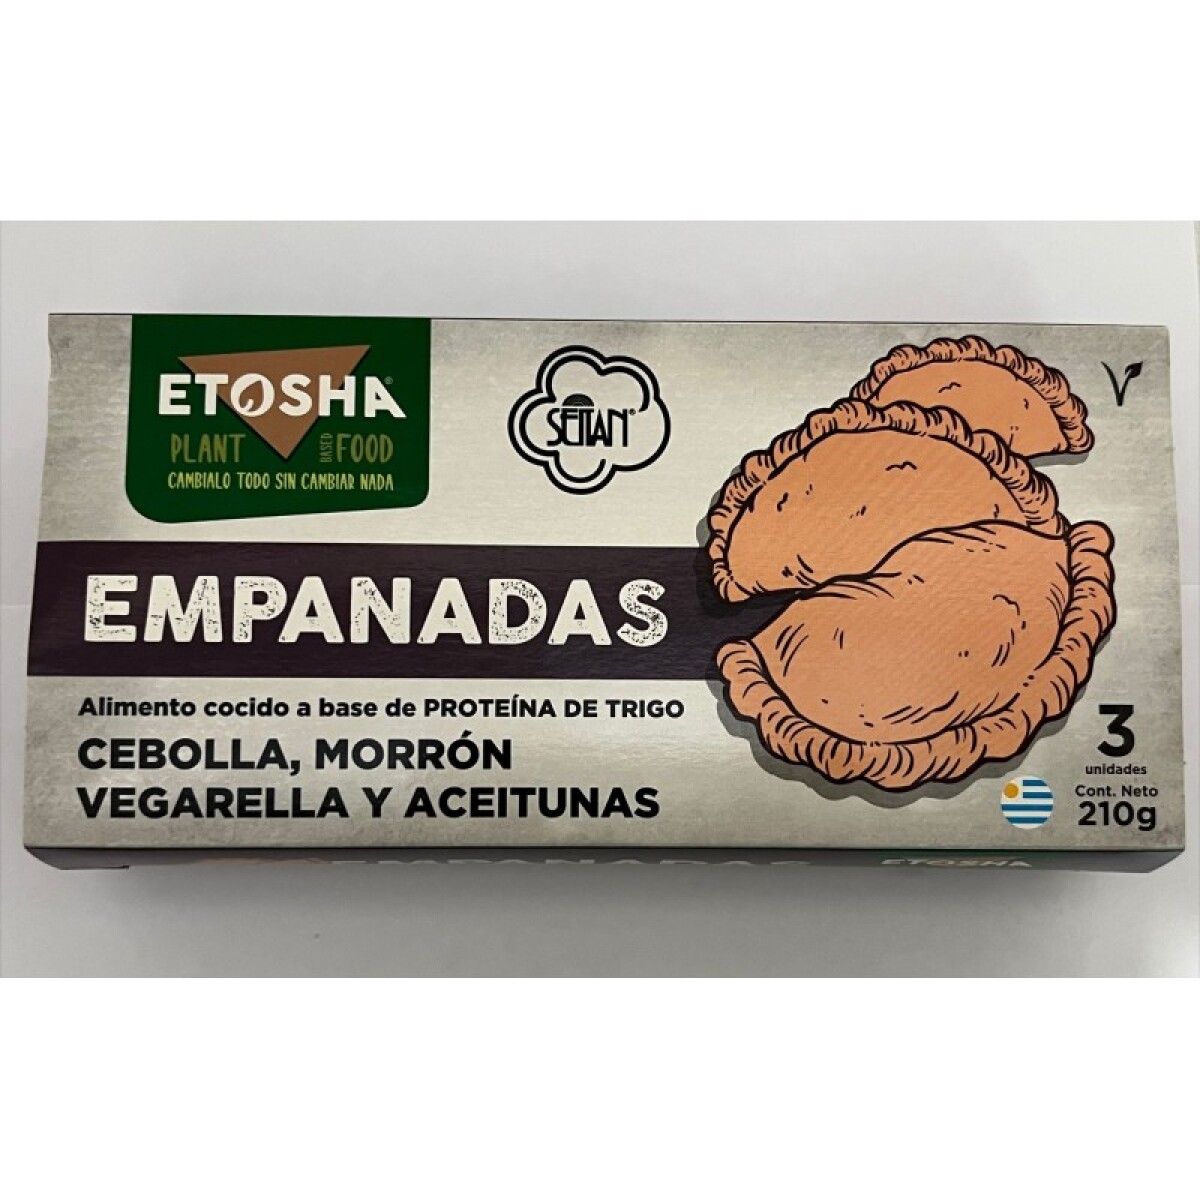 Empanadas seitán (ceb/morr/aceit/vegarella) Etosha - 3 uds.- 210 gr 